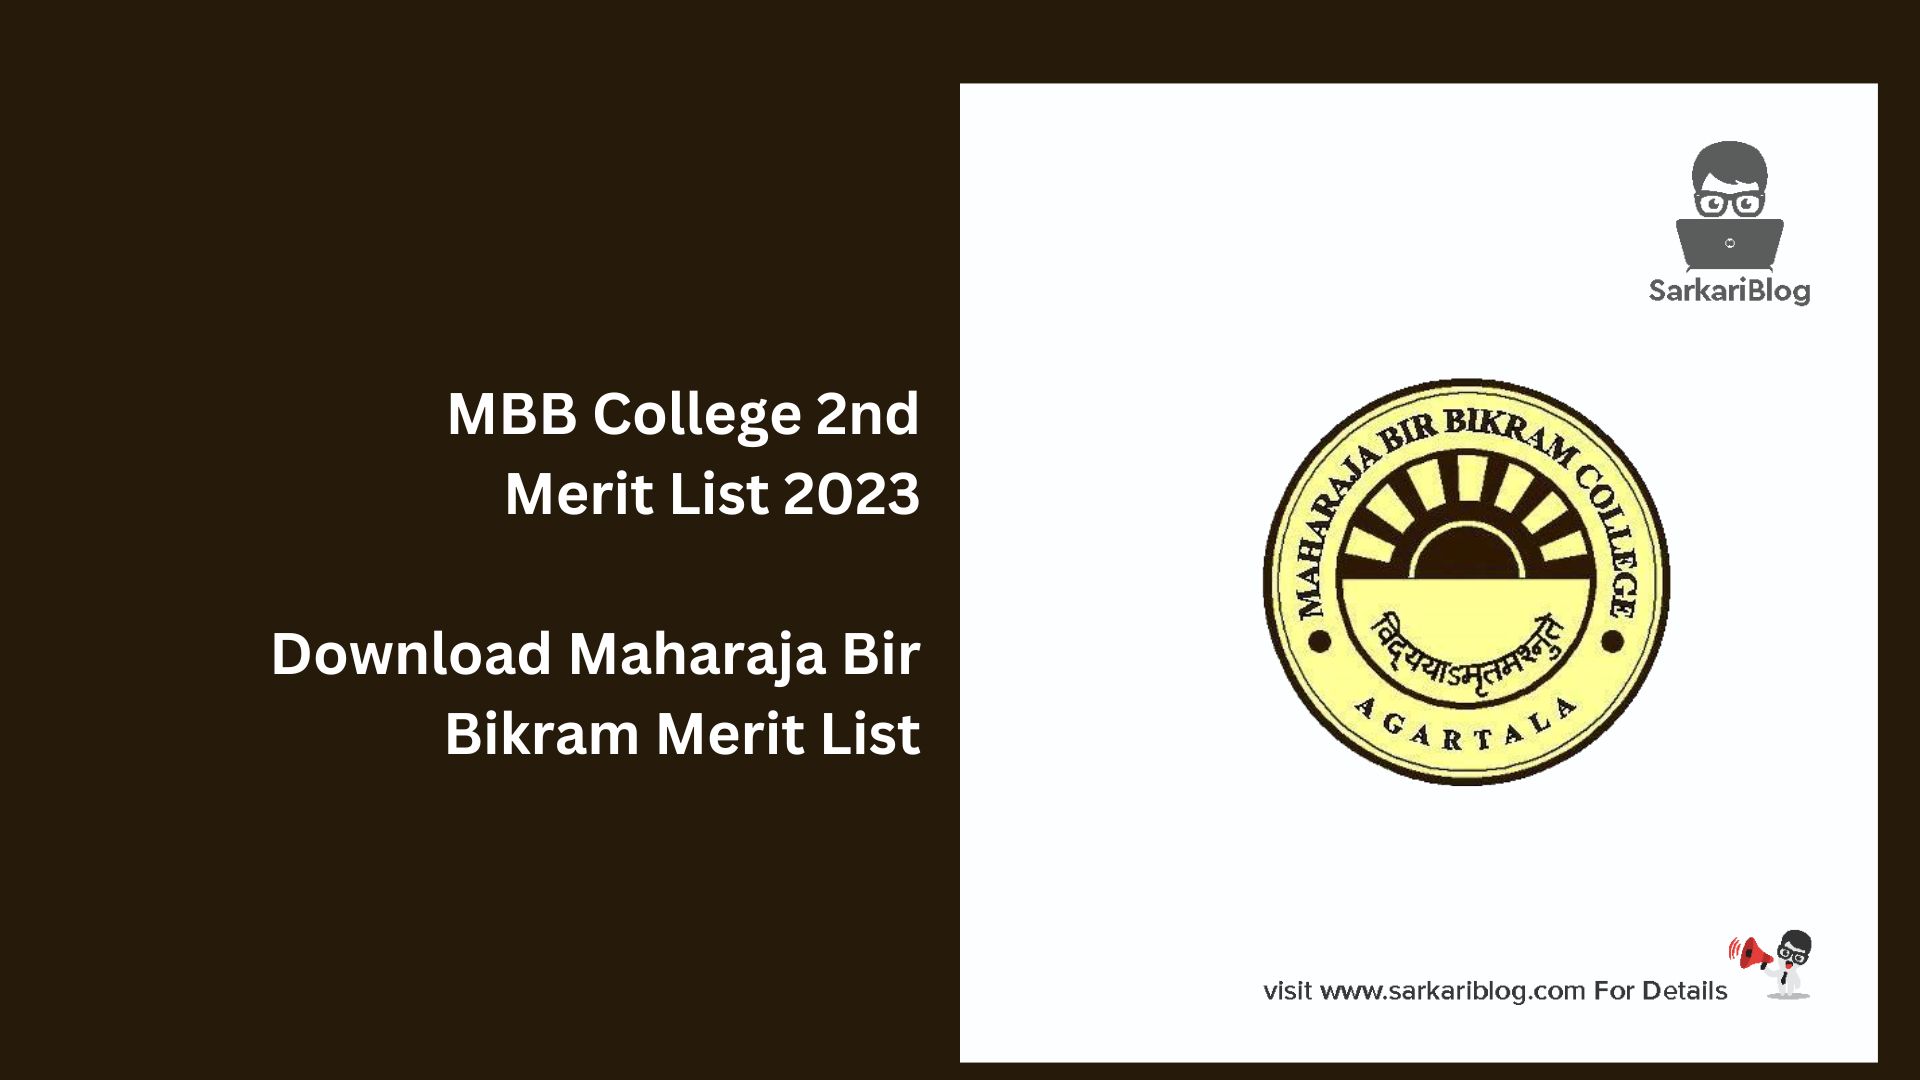 MBB College 2nd Merit List 2023